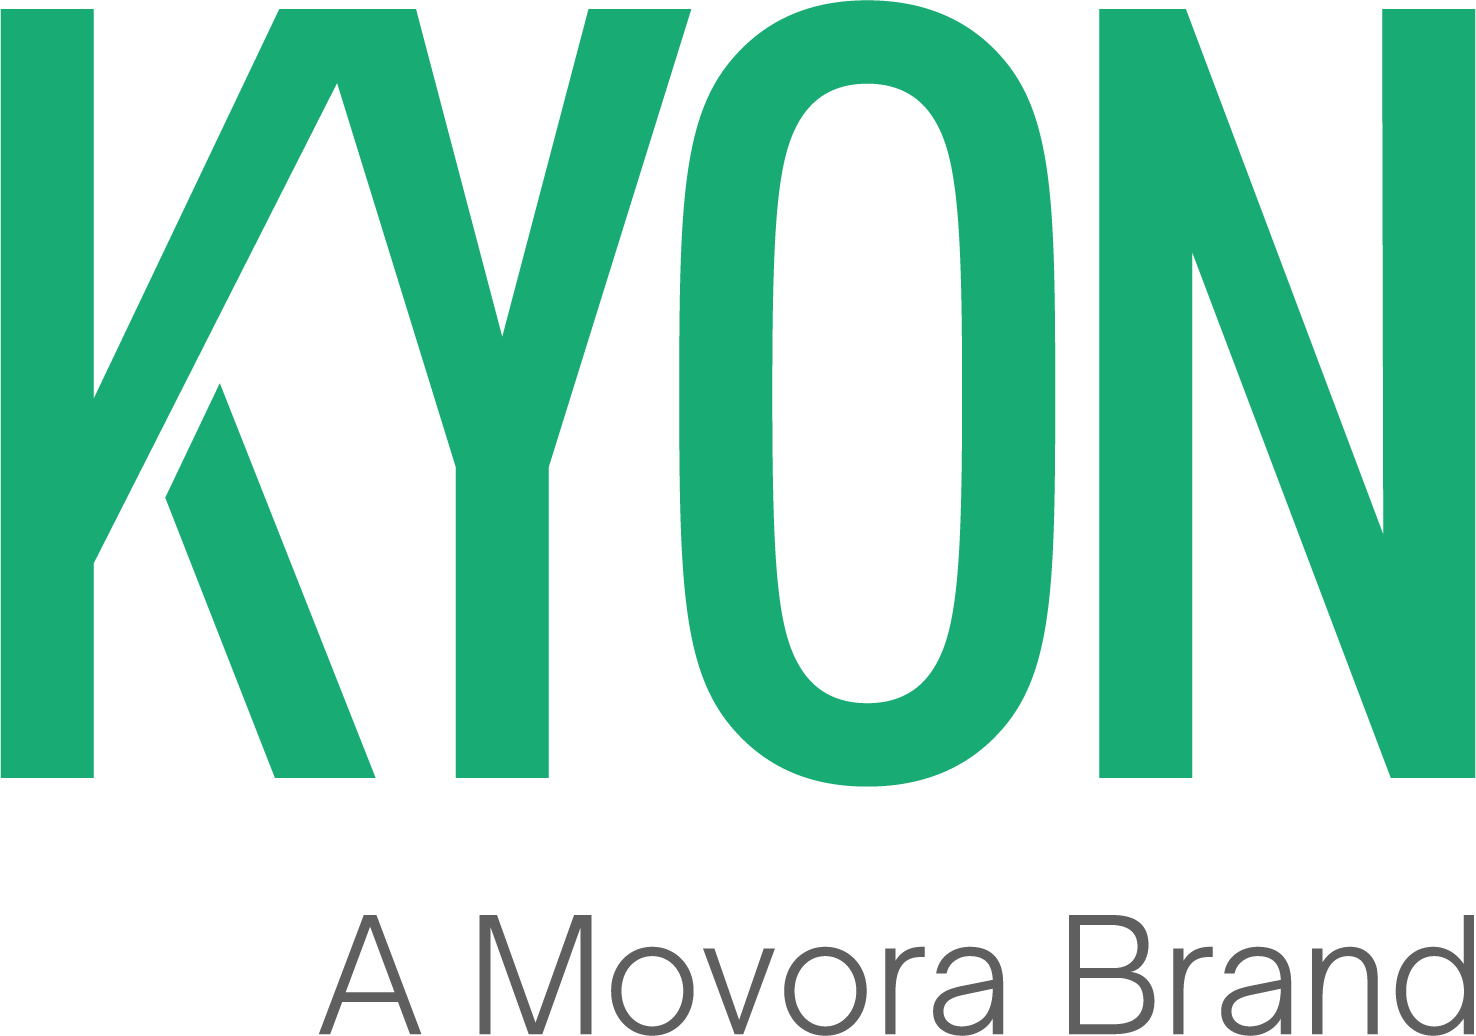 Kyon Logo claim